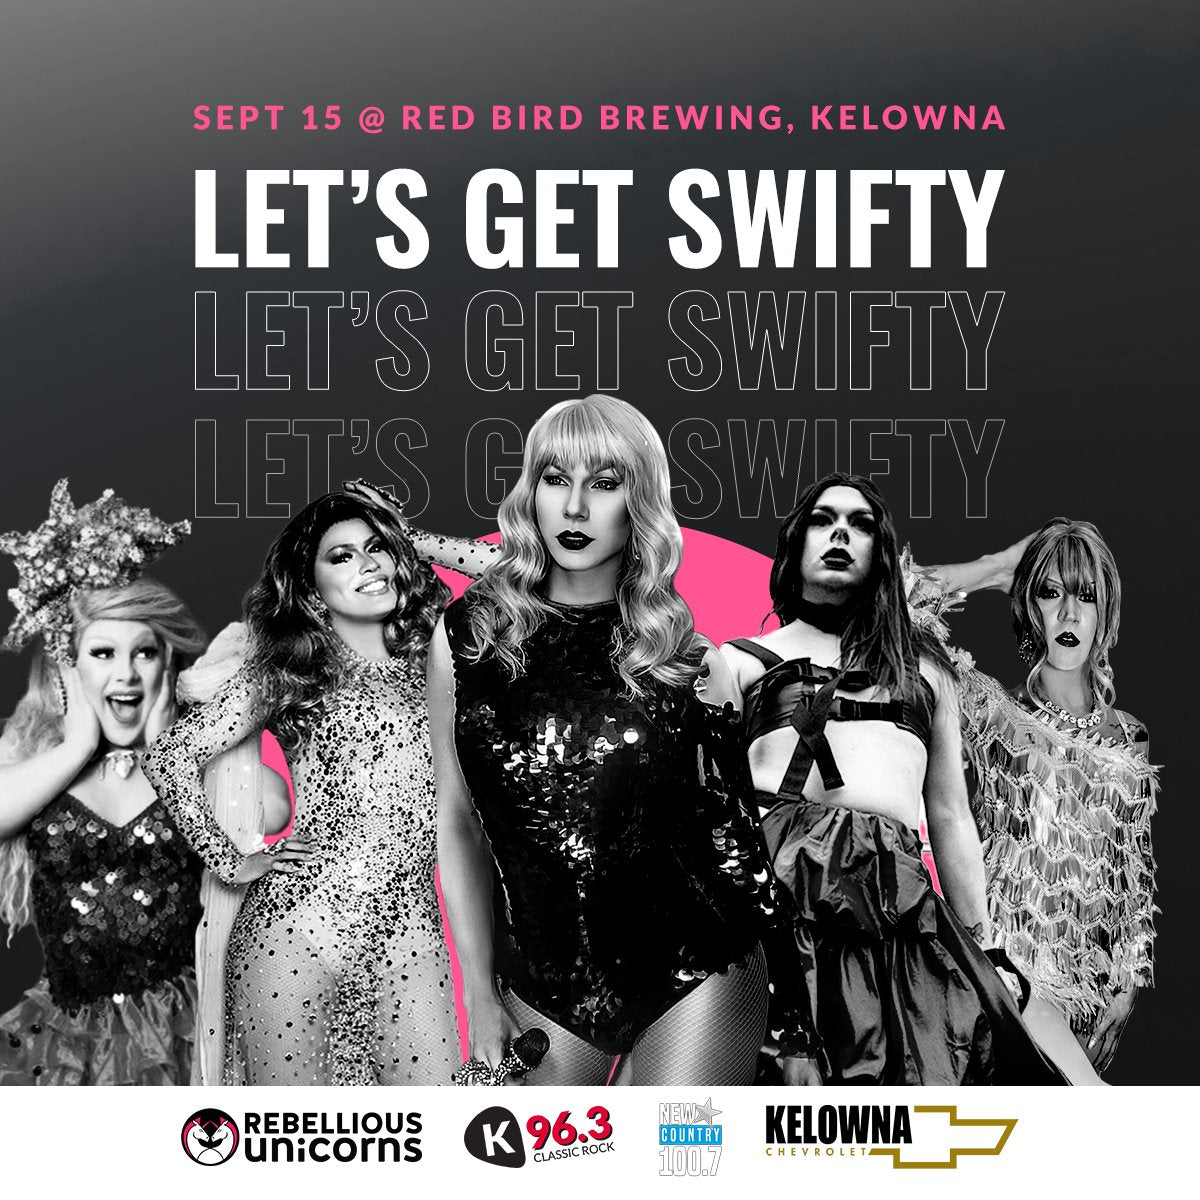 Let's Get Swifty (Kelowna Sept 15) - Rebellious Unicorns